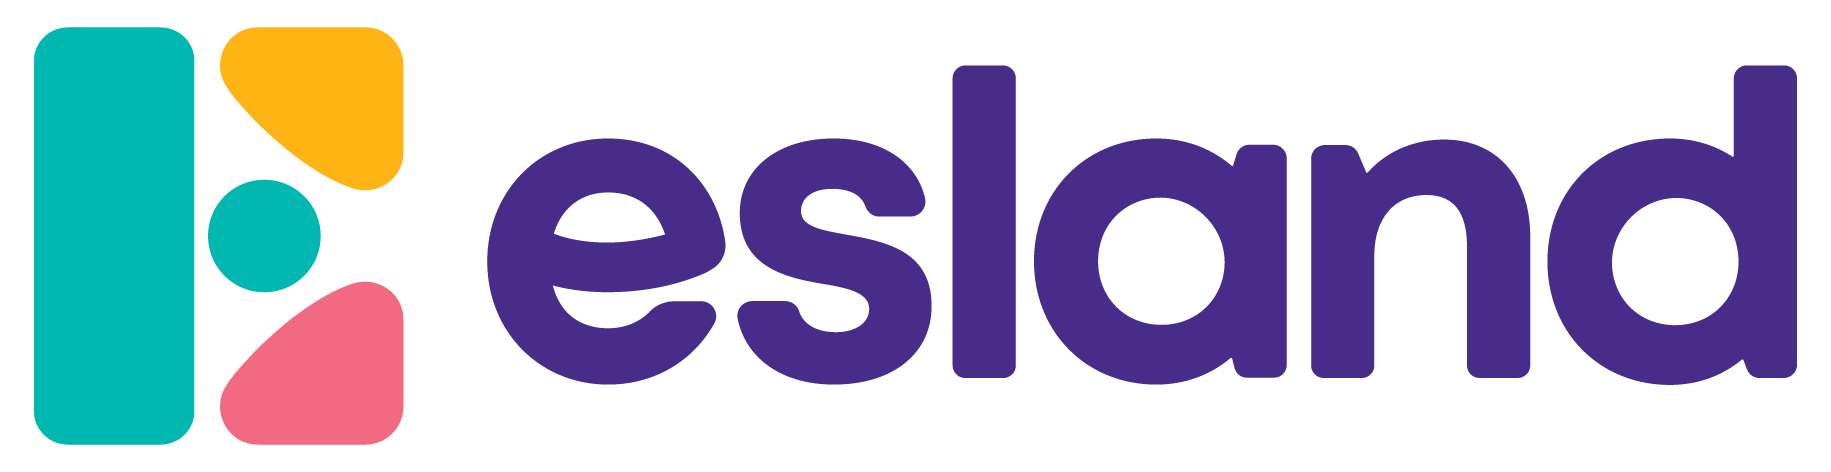 Esland Logo high res